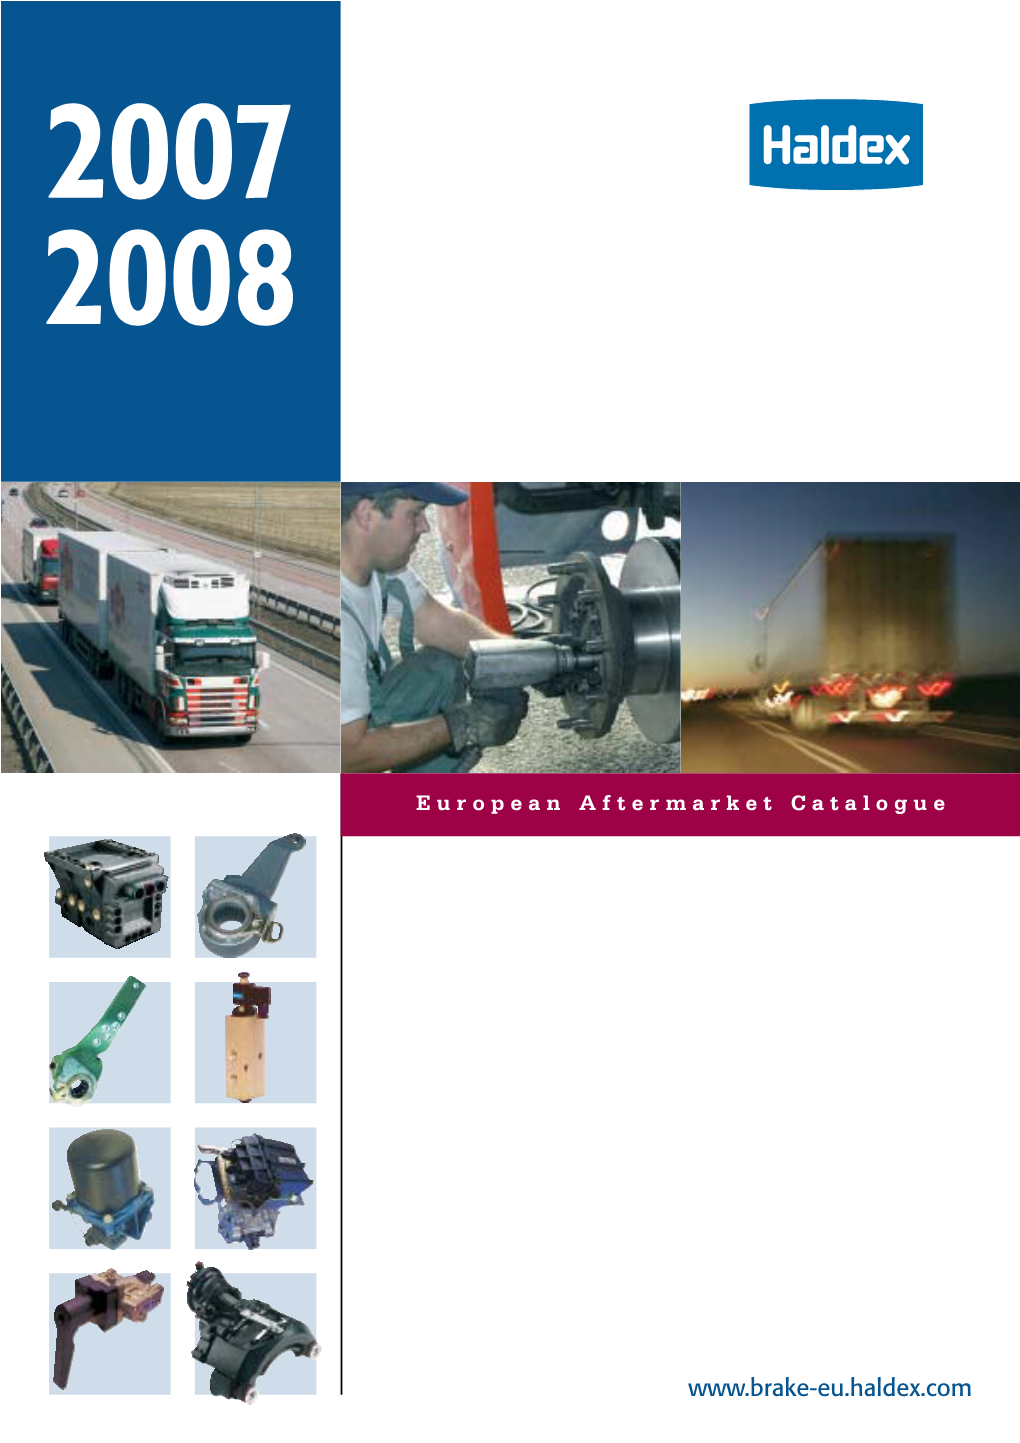 Introduction to the Haldex European Aftermarket Catalogue 2007/2008 This Catalogue Covers the Haldex Product Range Available to the European Aftermarket